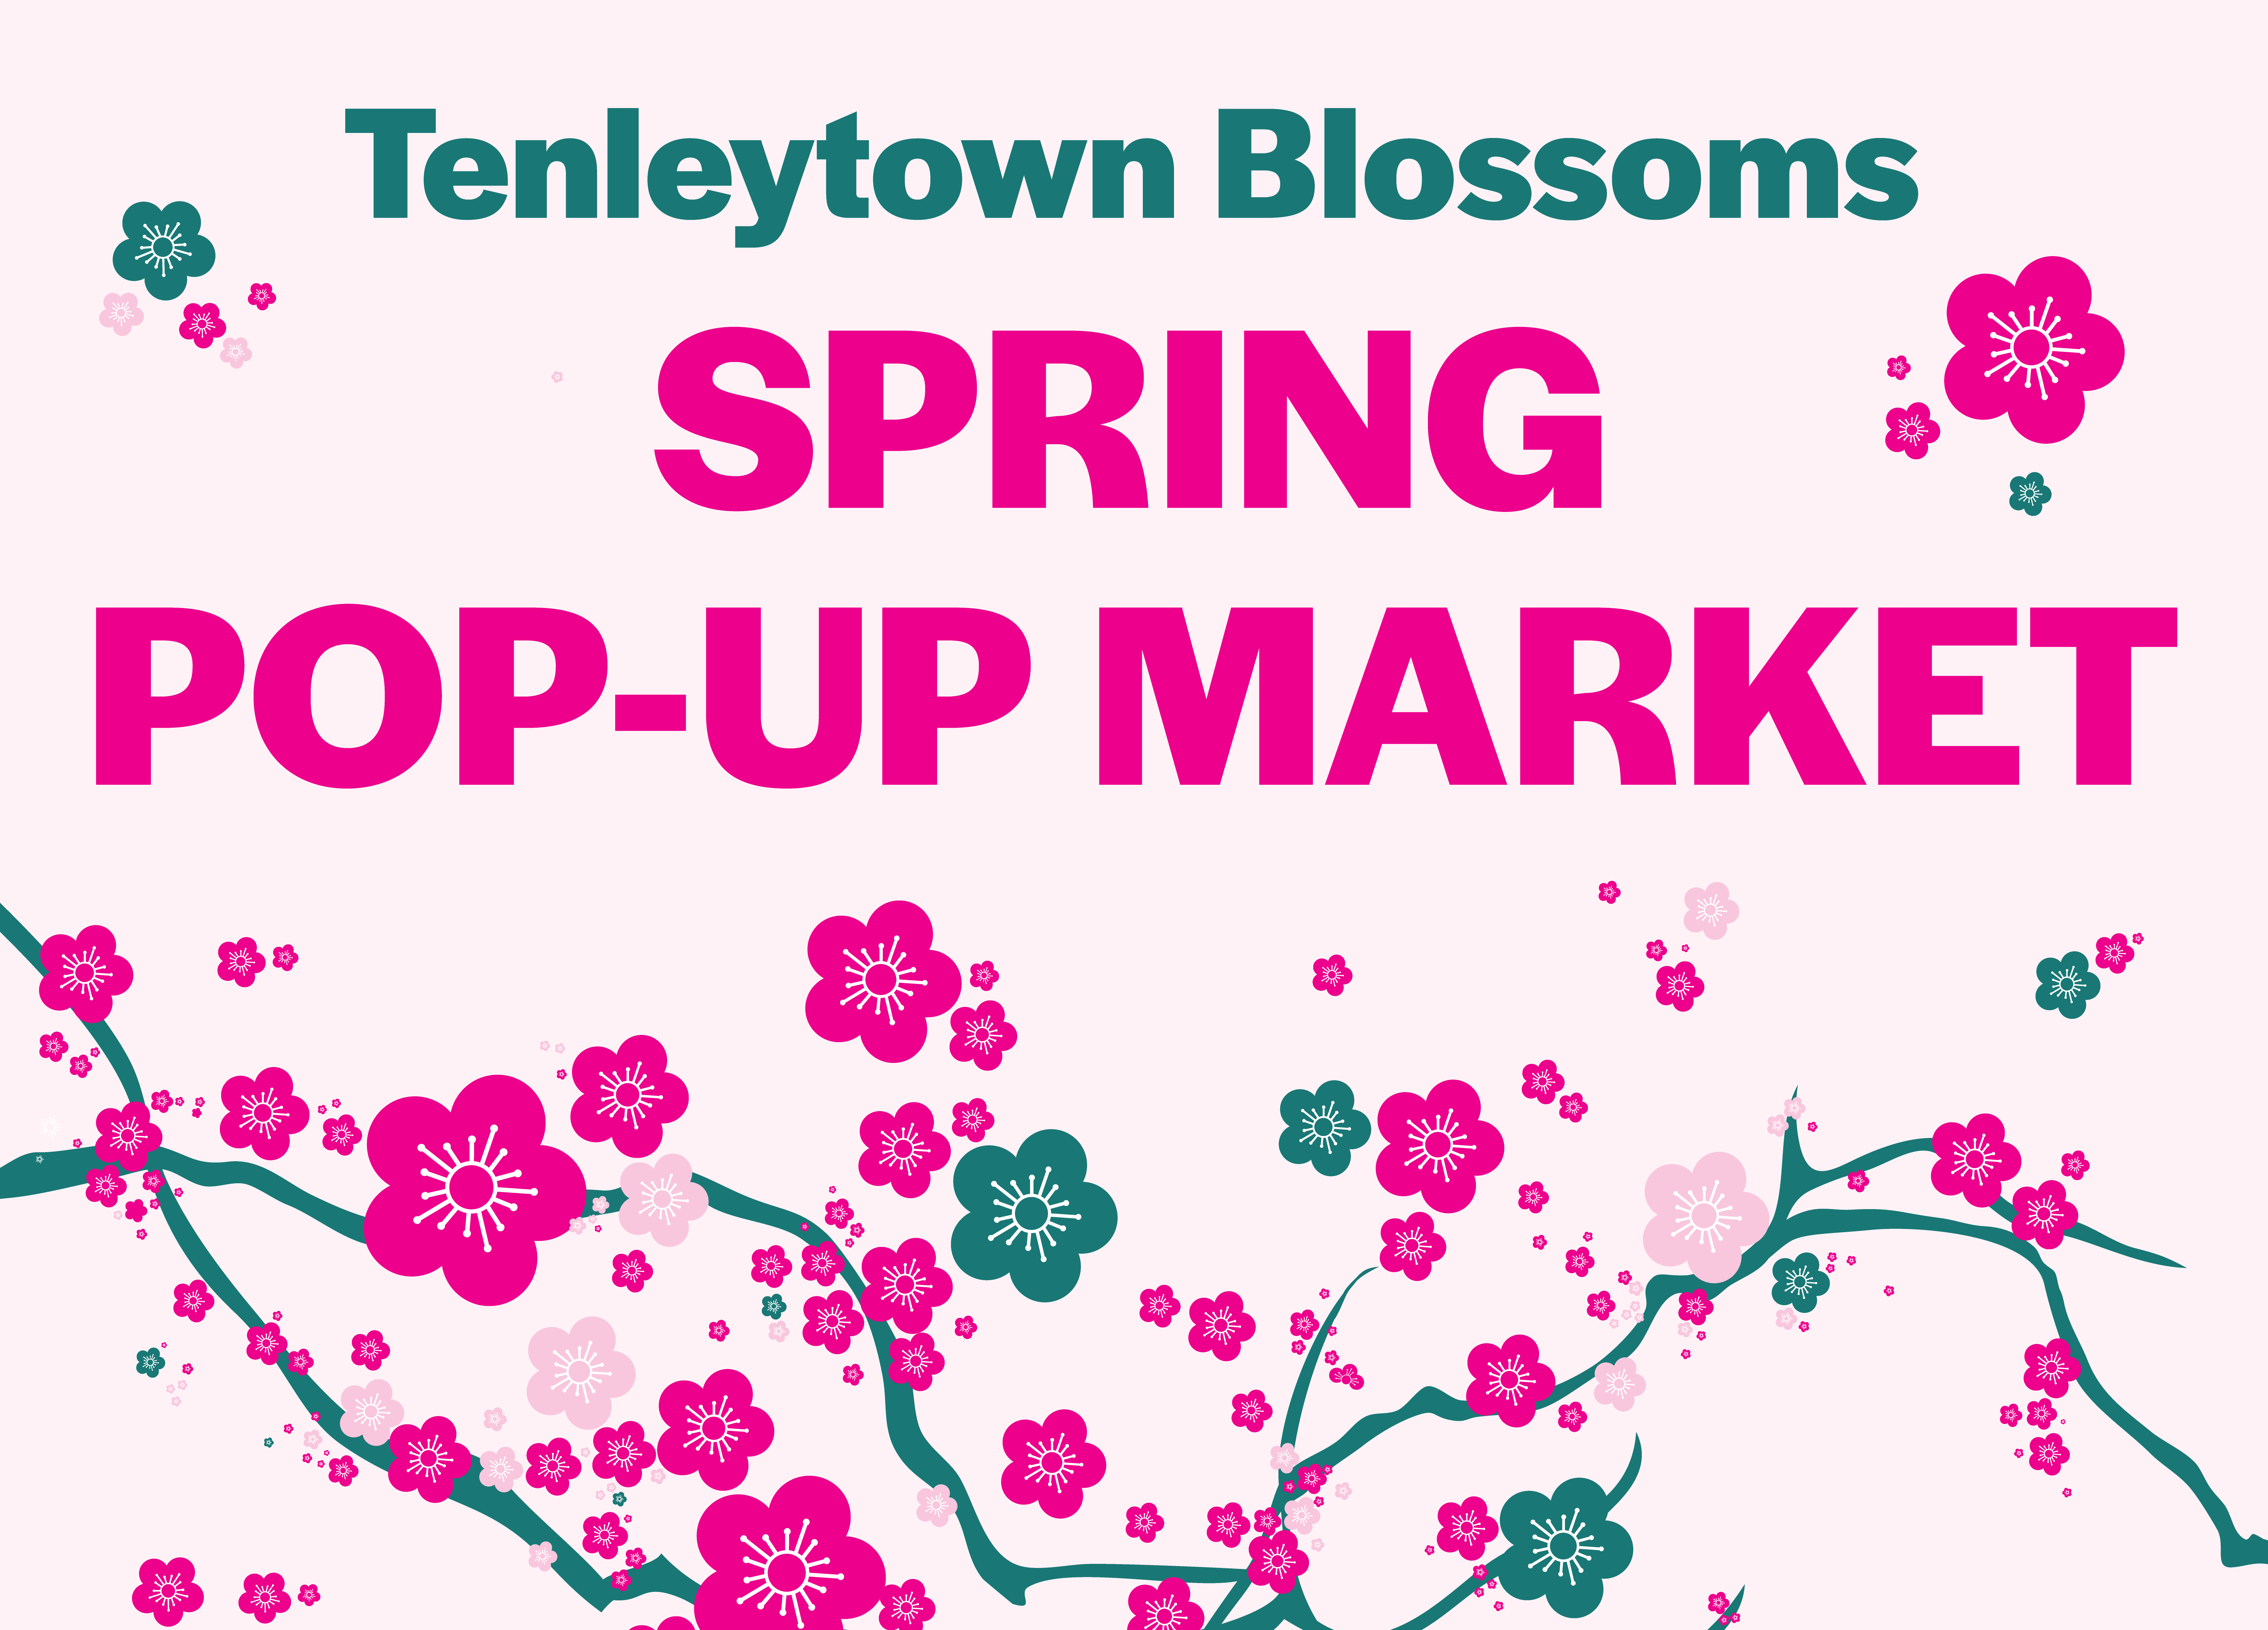 Tenleytown Blossoms: Spring Pop-Up Market